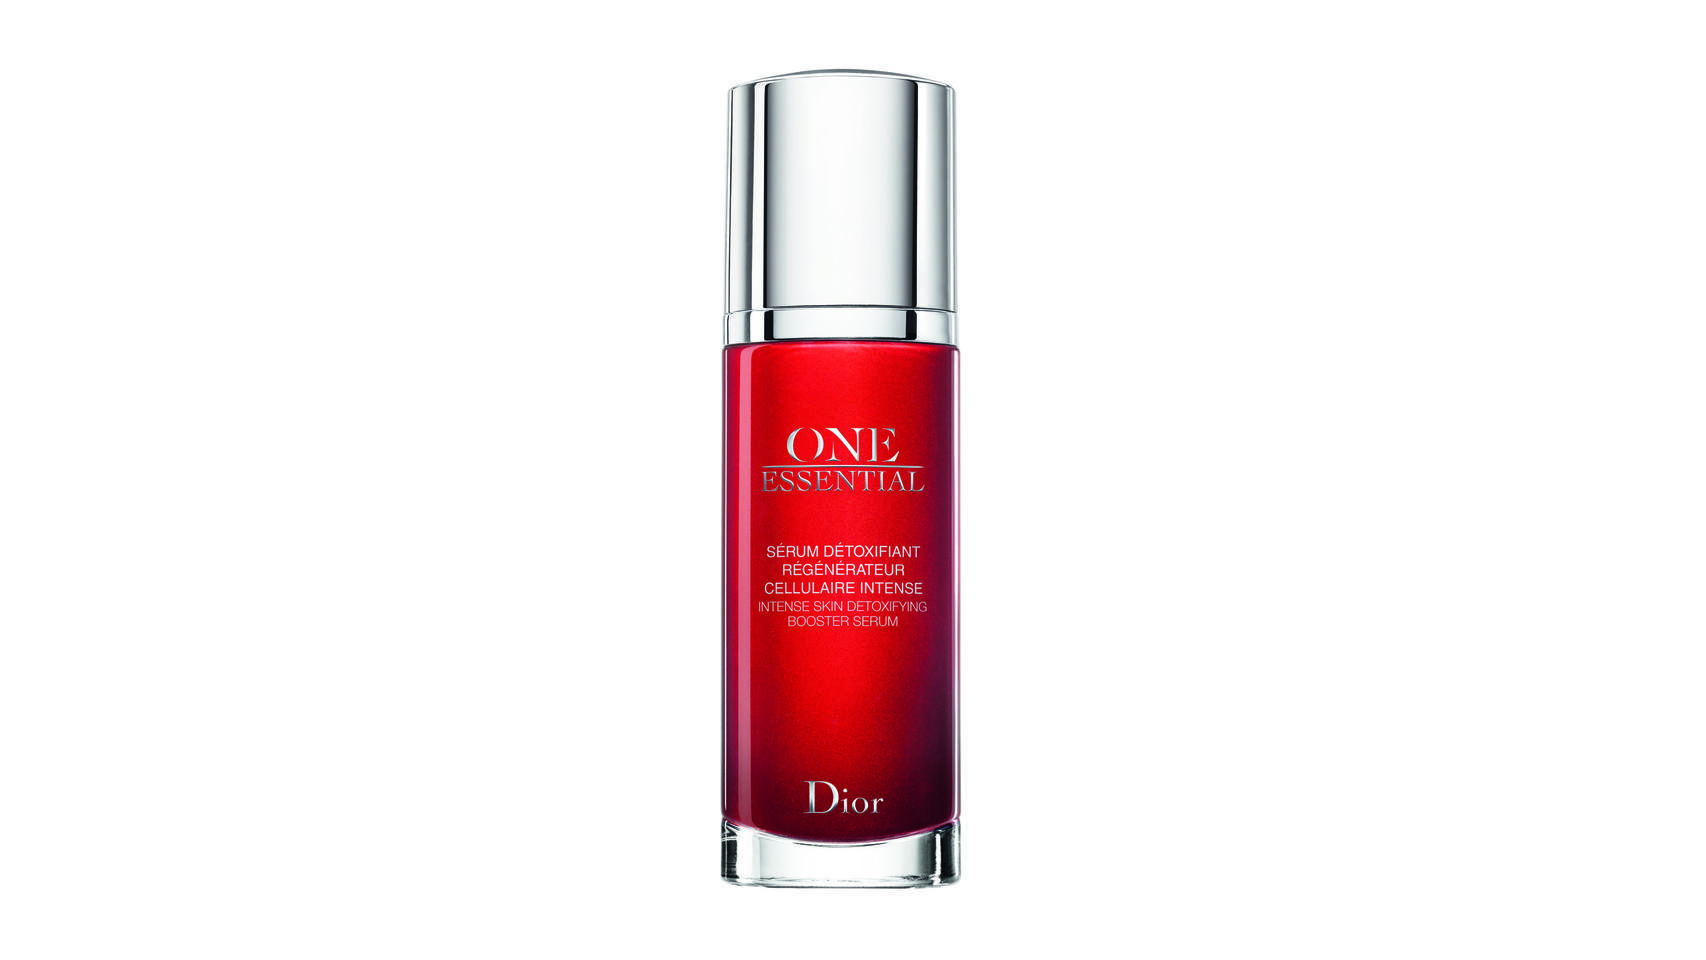 One Essential Intense Skin Detoxifying Booster Serum de Dior.